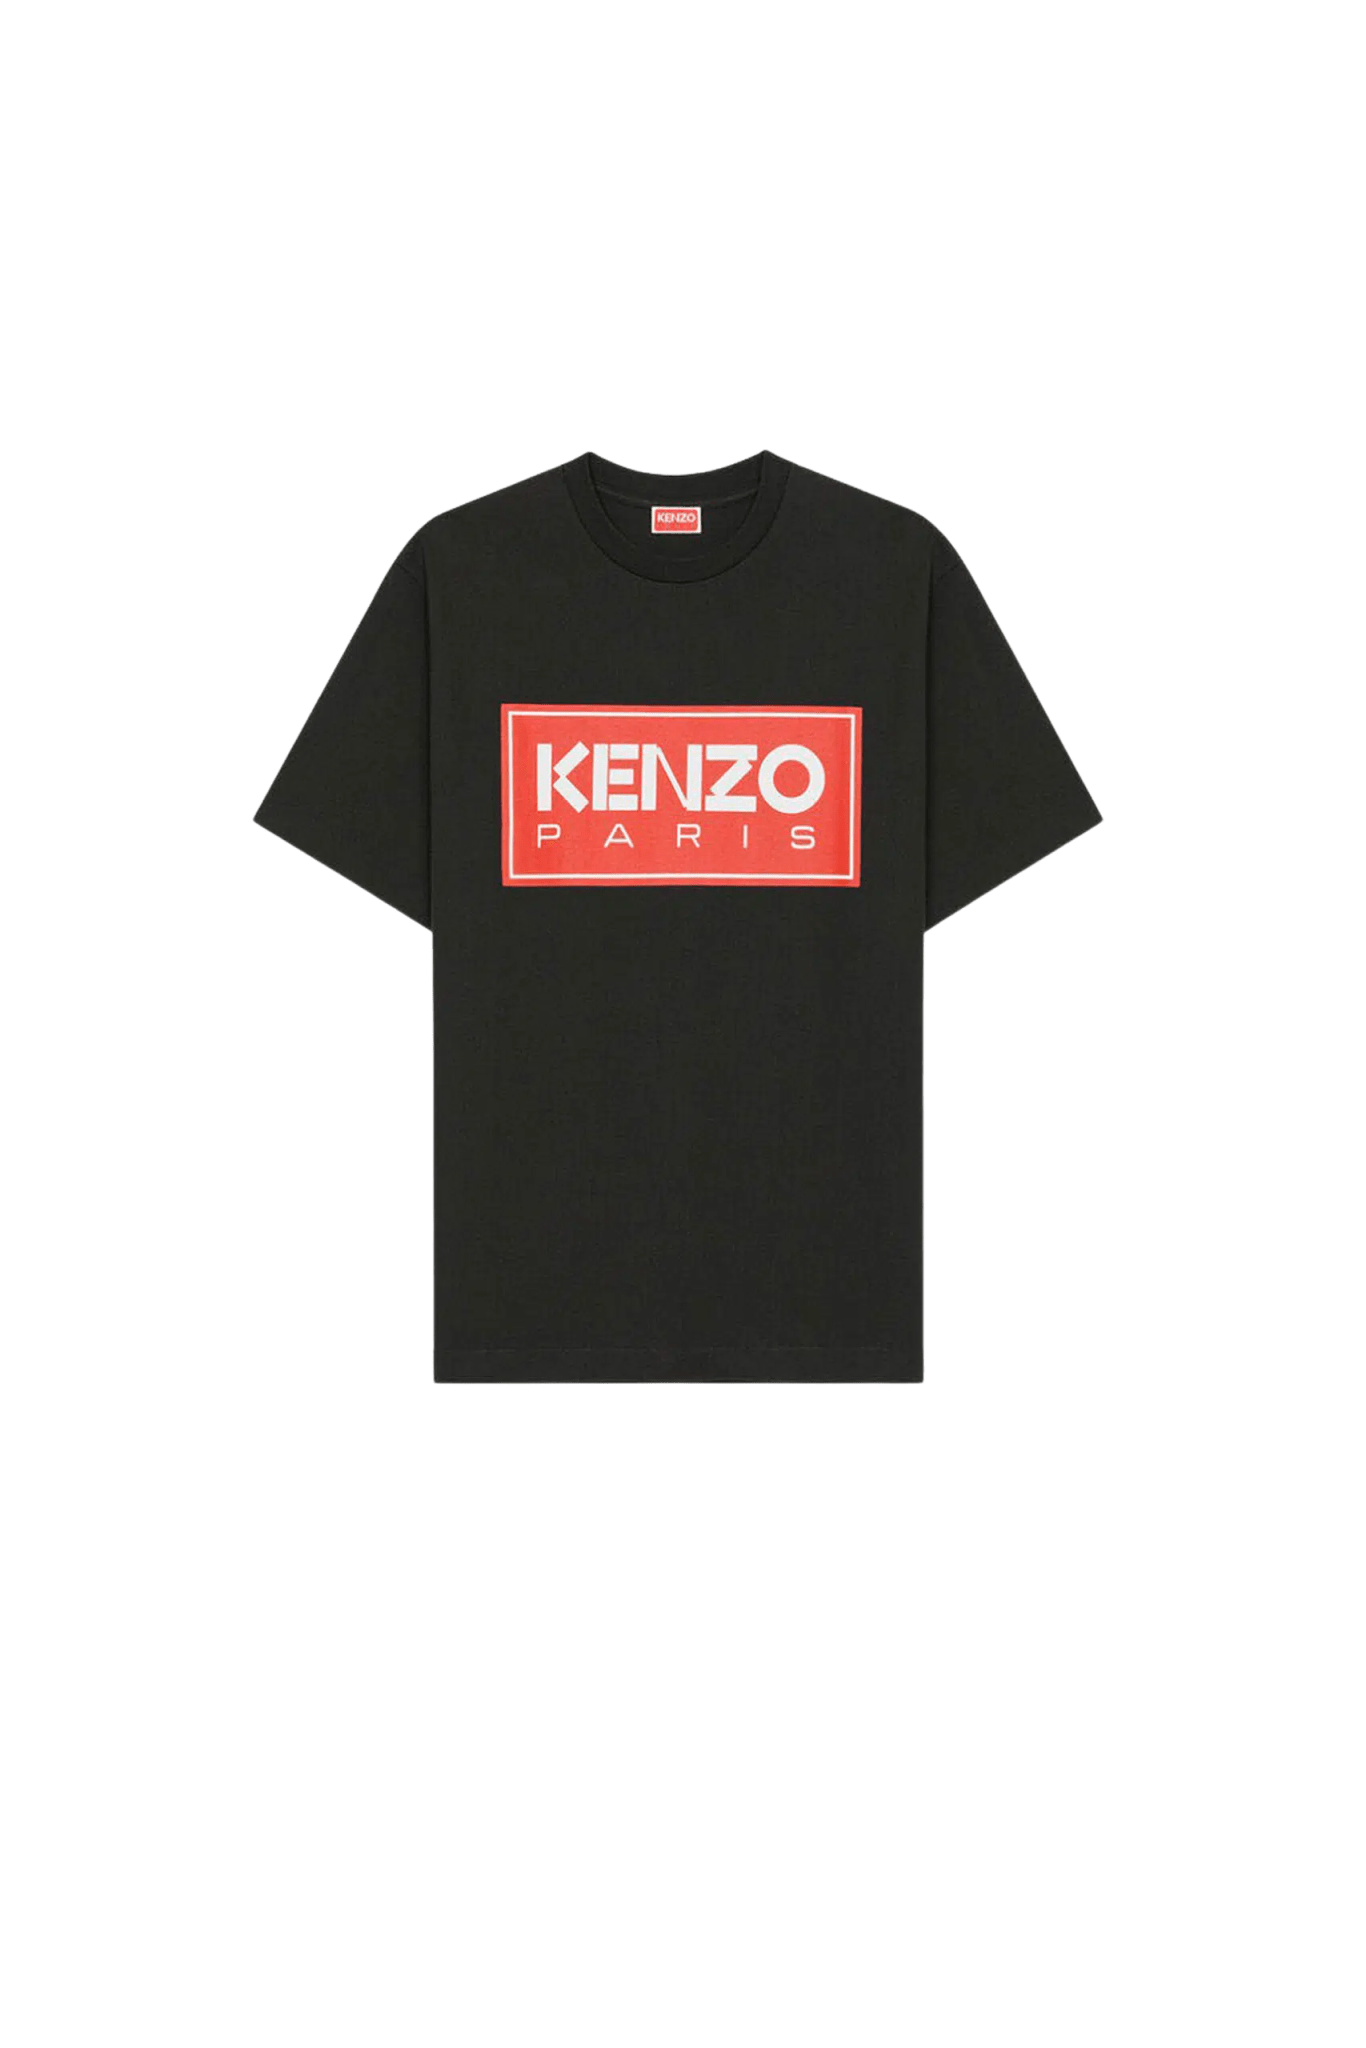 T-Shirt Kenzo Paris - Urban Clothing